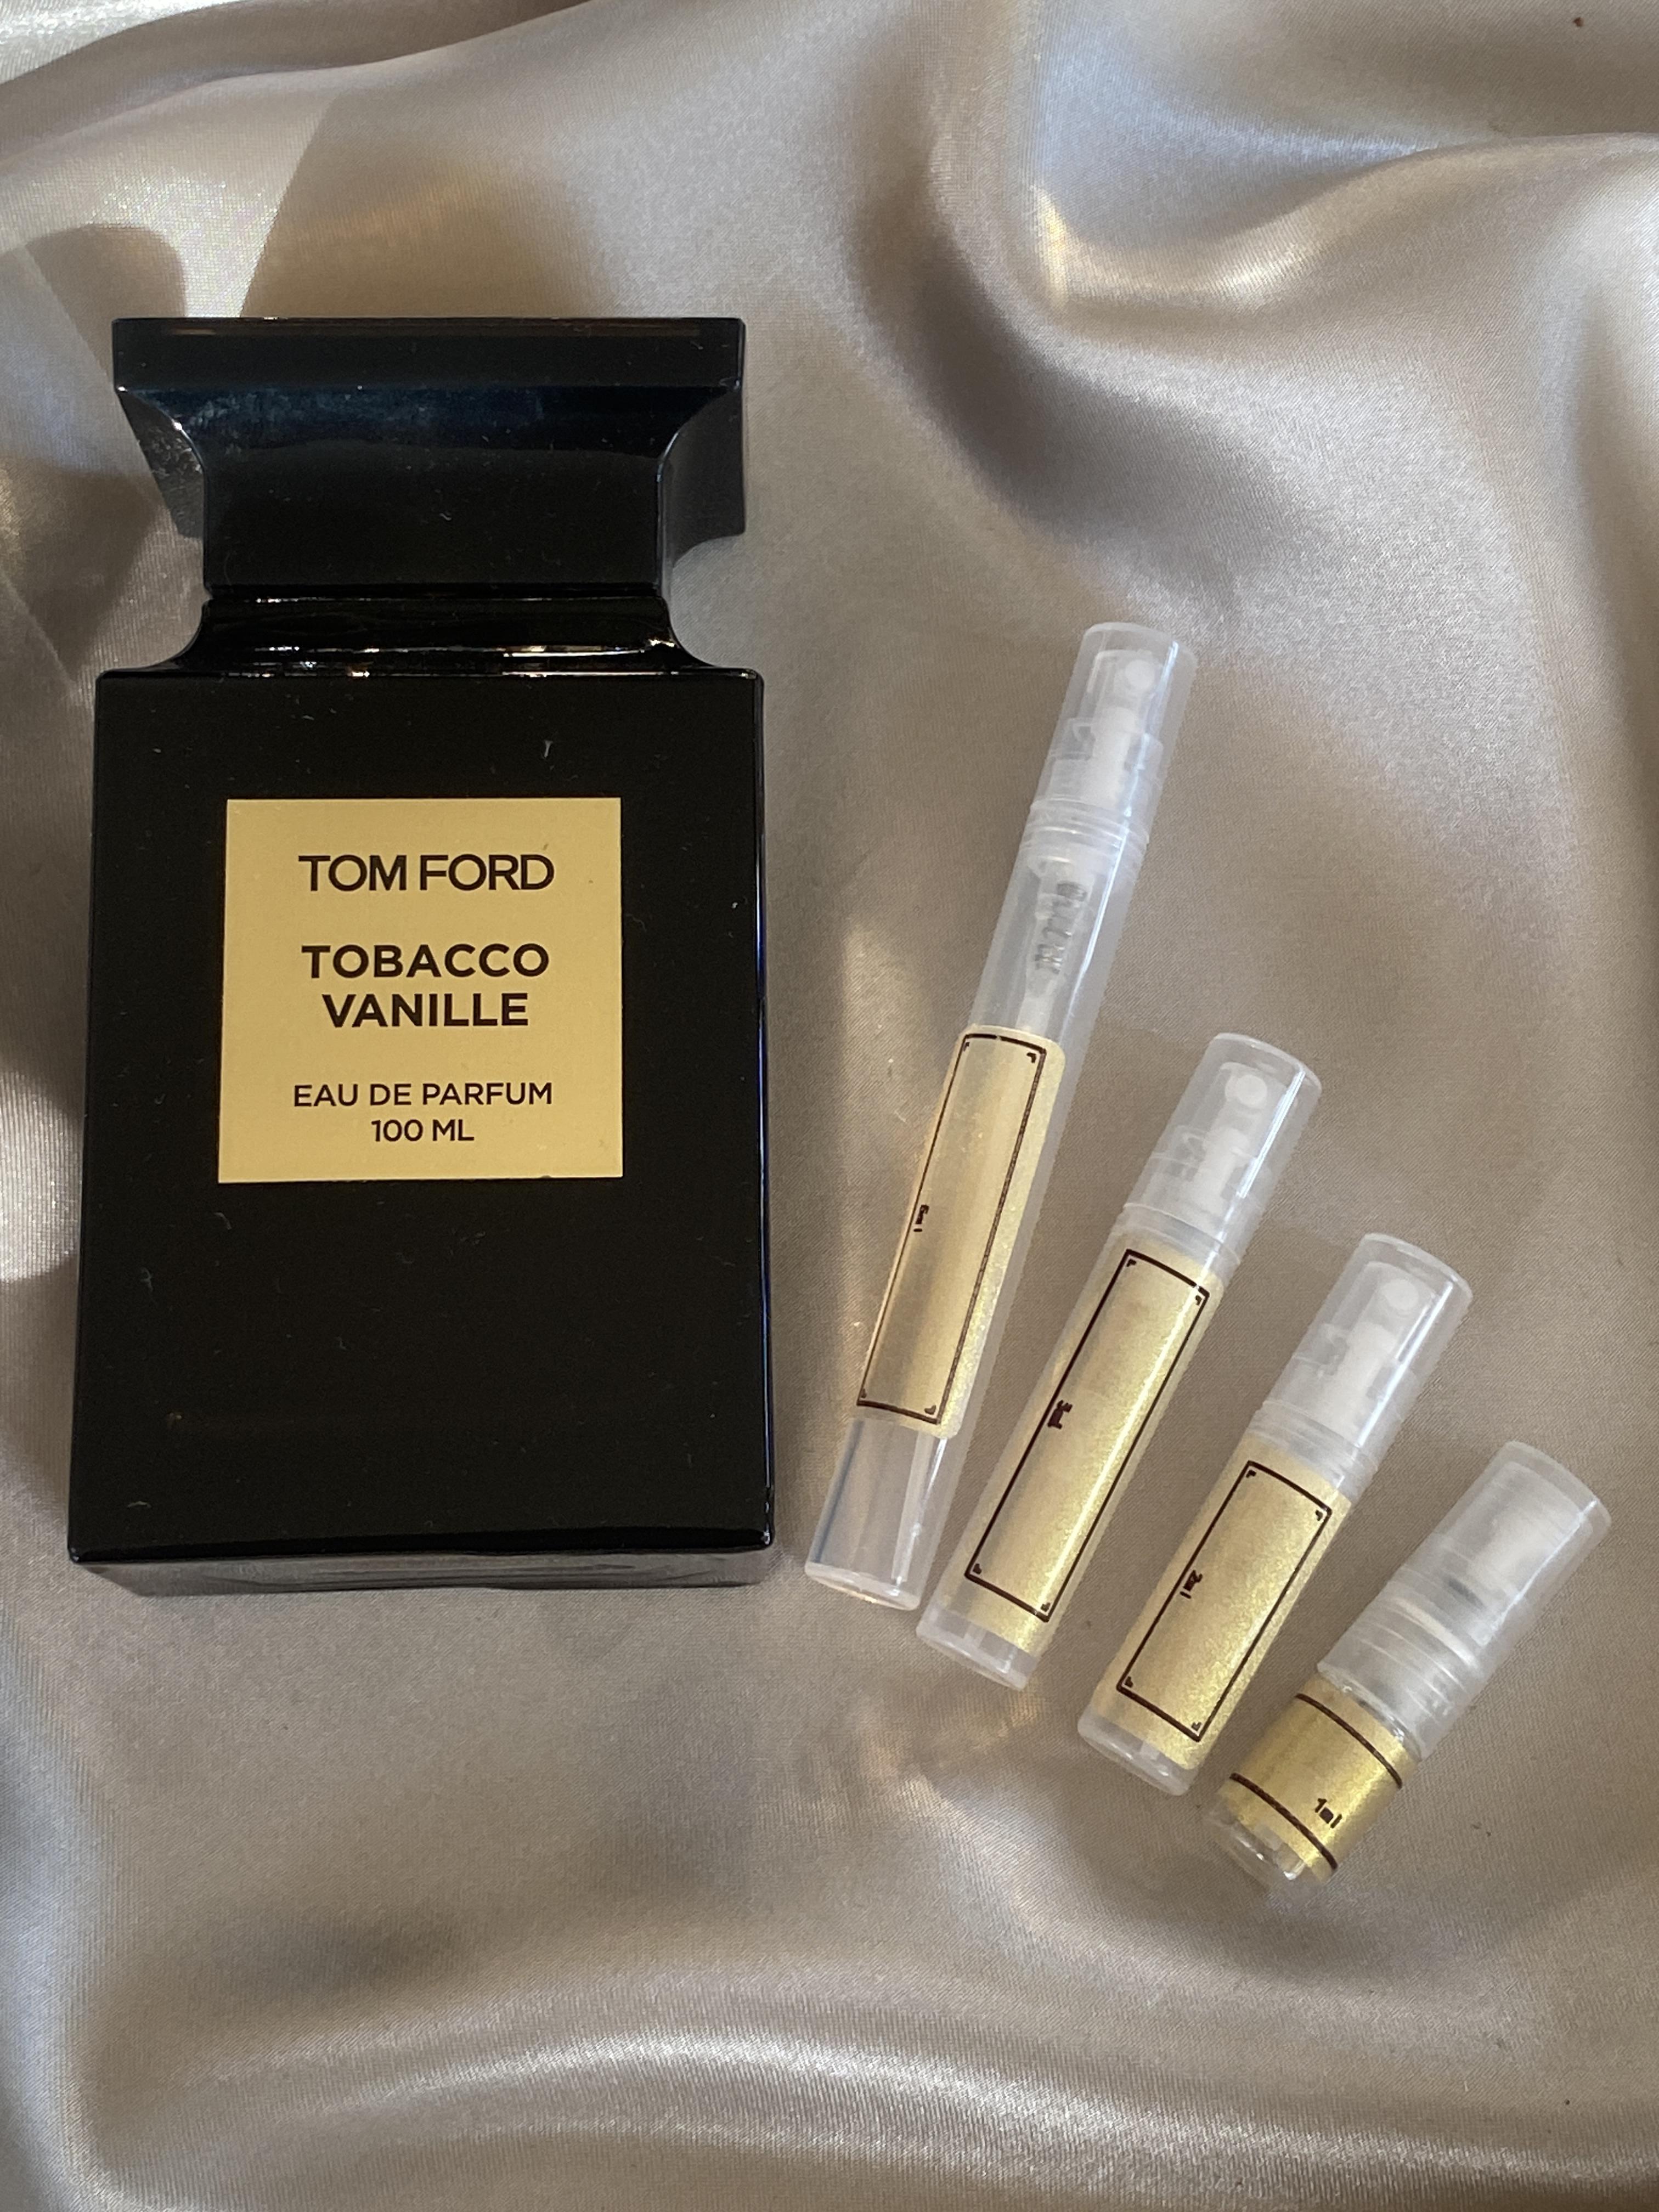 Tom Ford - Tobacco Vanille - Fragrance Samples